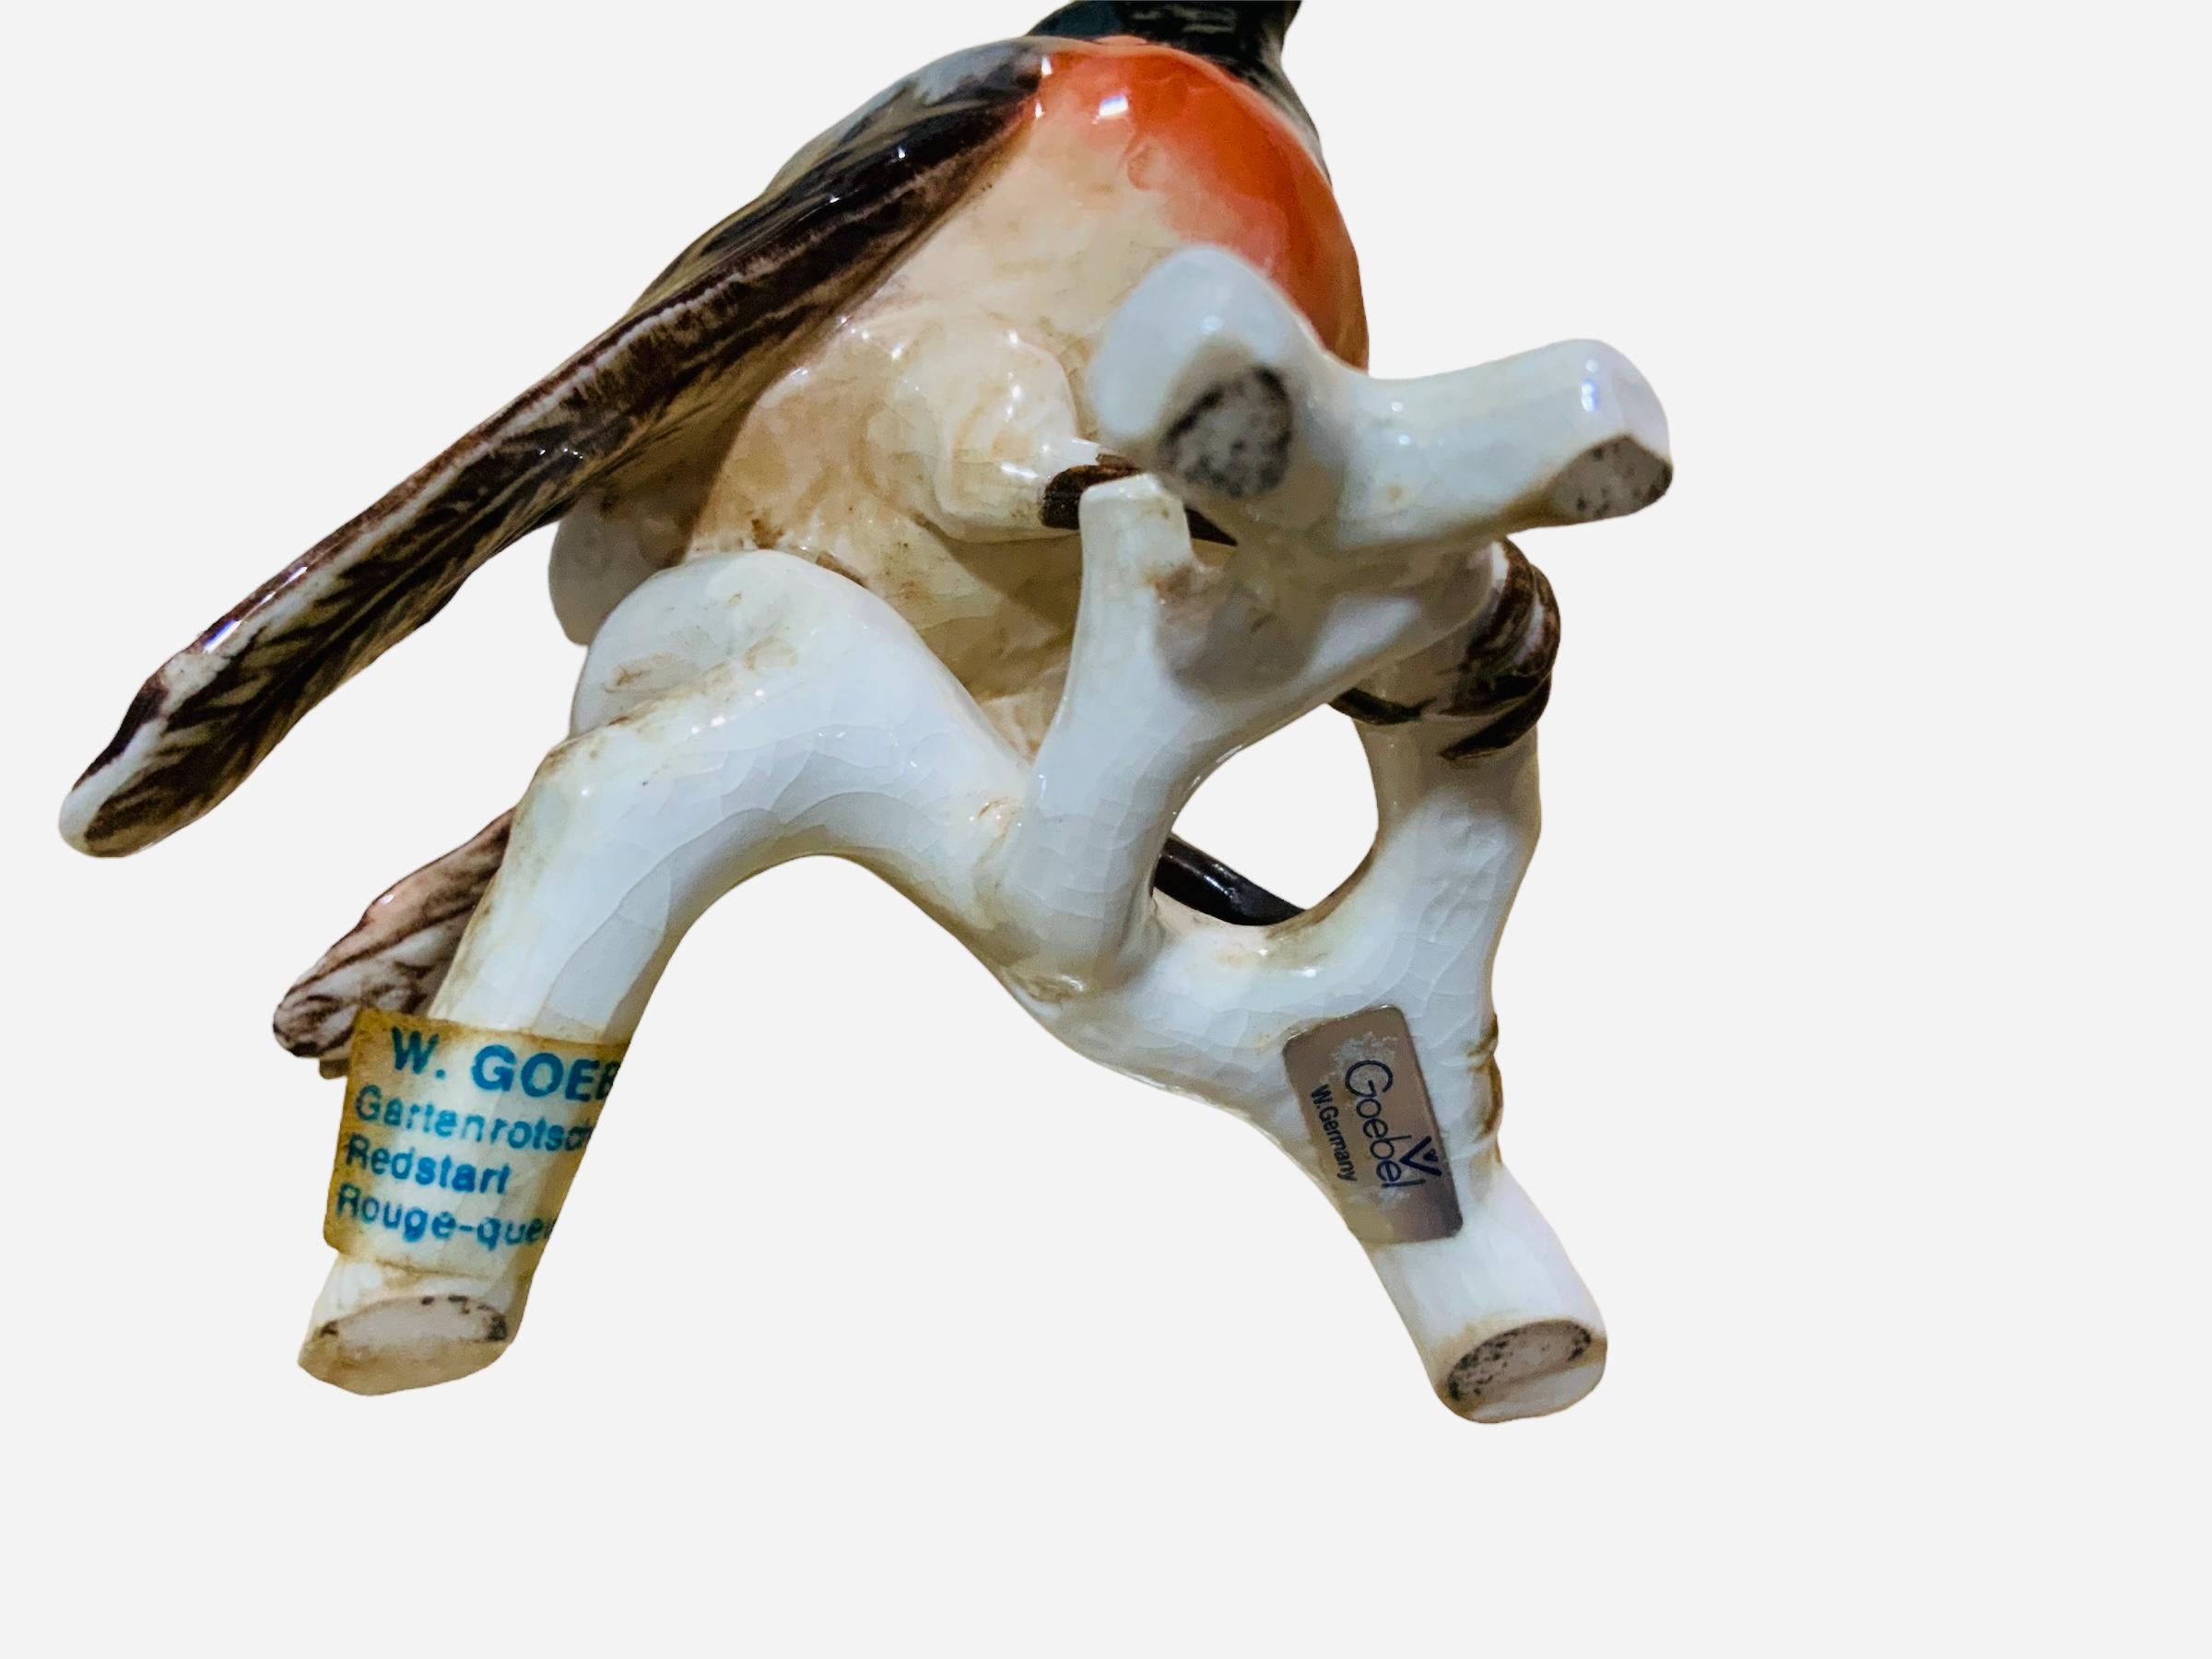 German Goebel Porcelain Hand Painted Bird Figurine of a Redstart